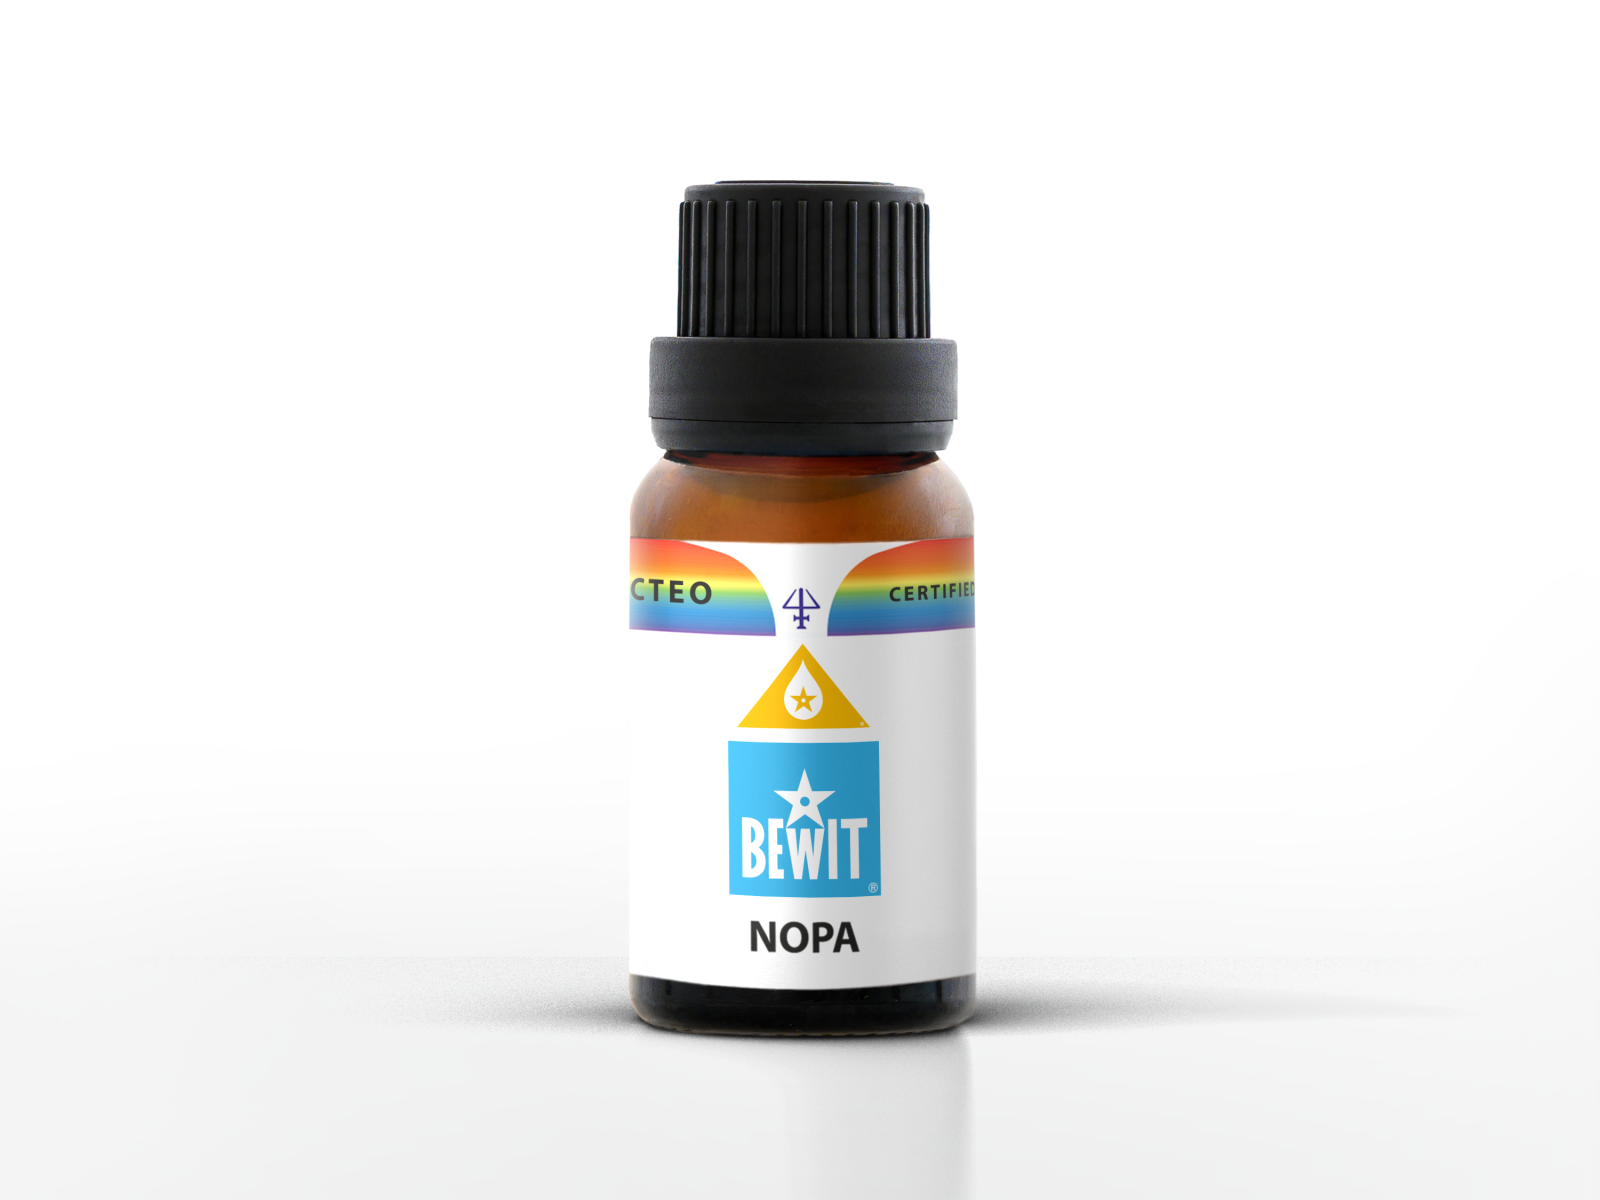 BEWIT NOPA - A unique blend of the essential oils - 1